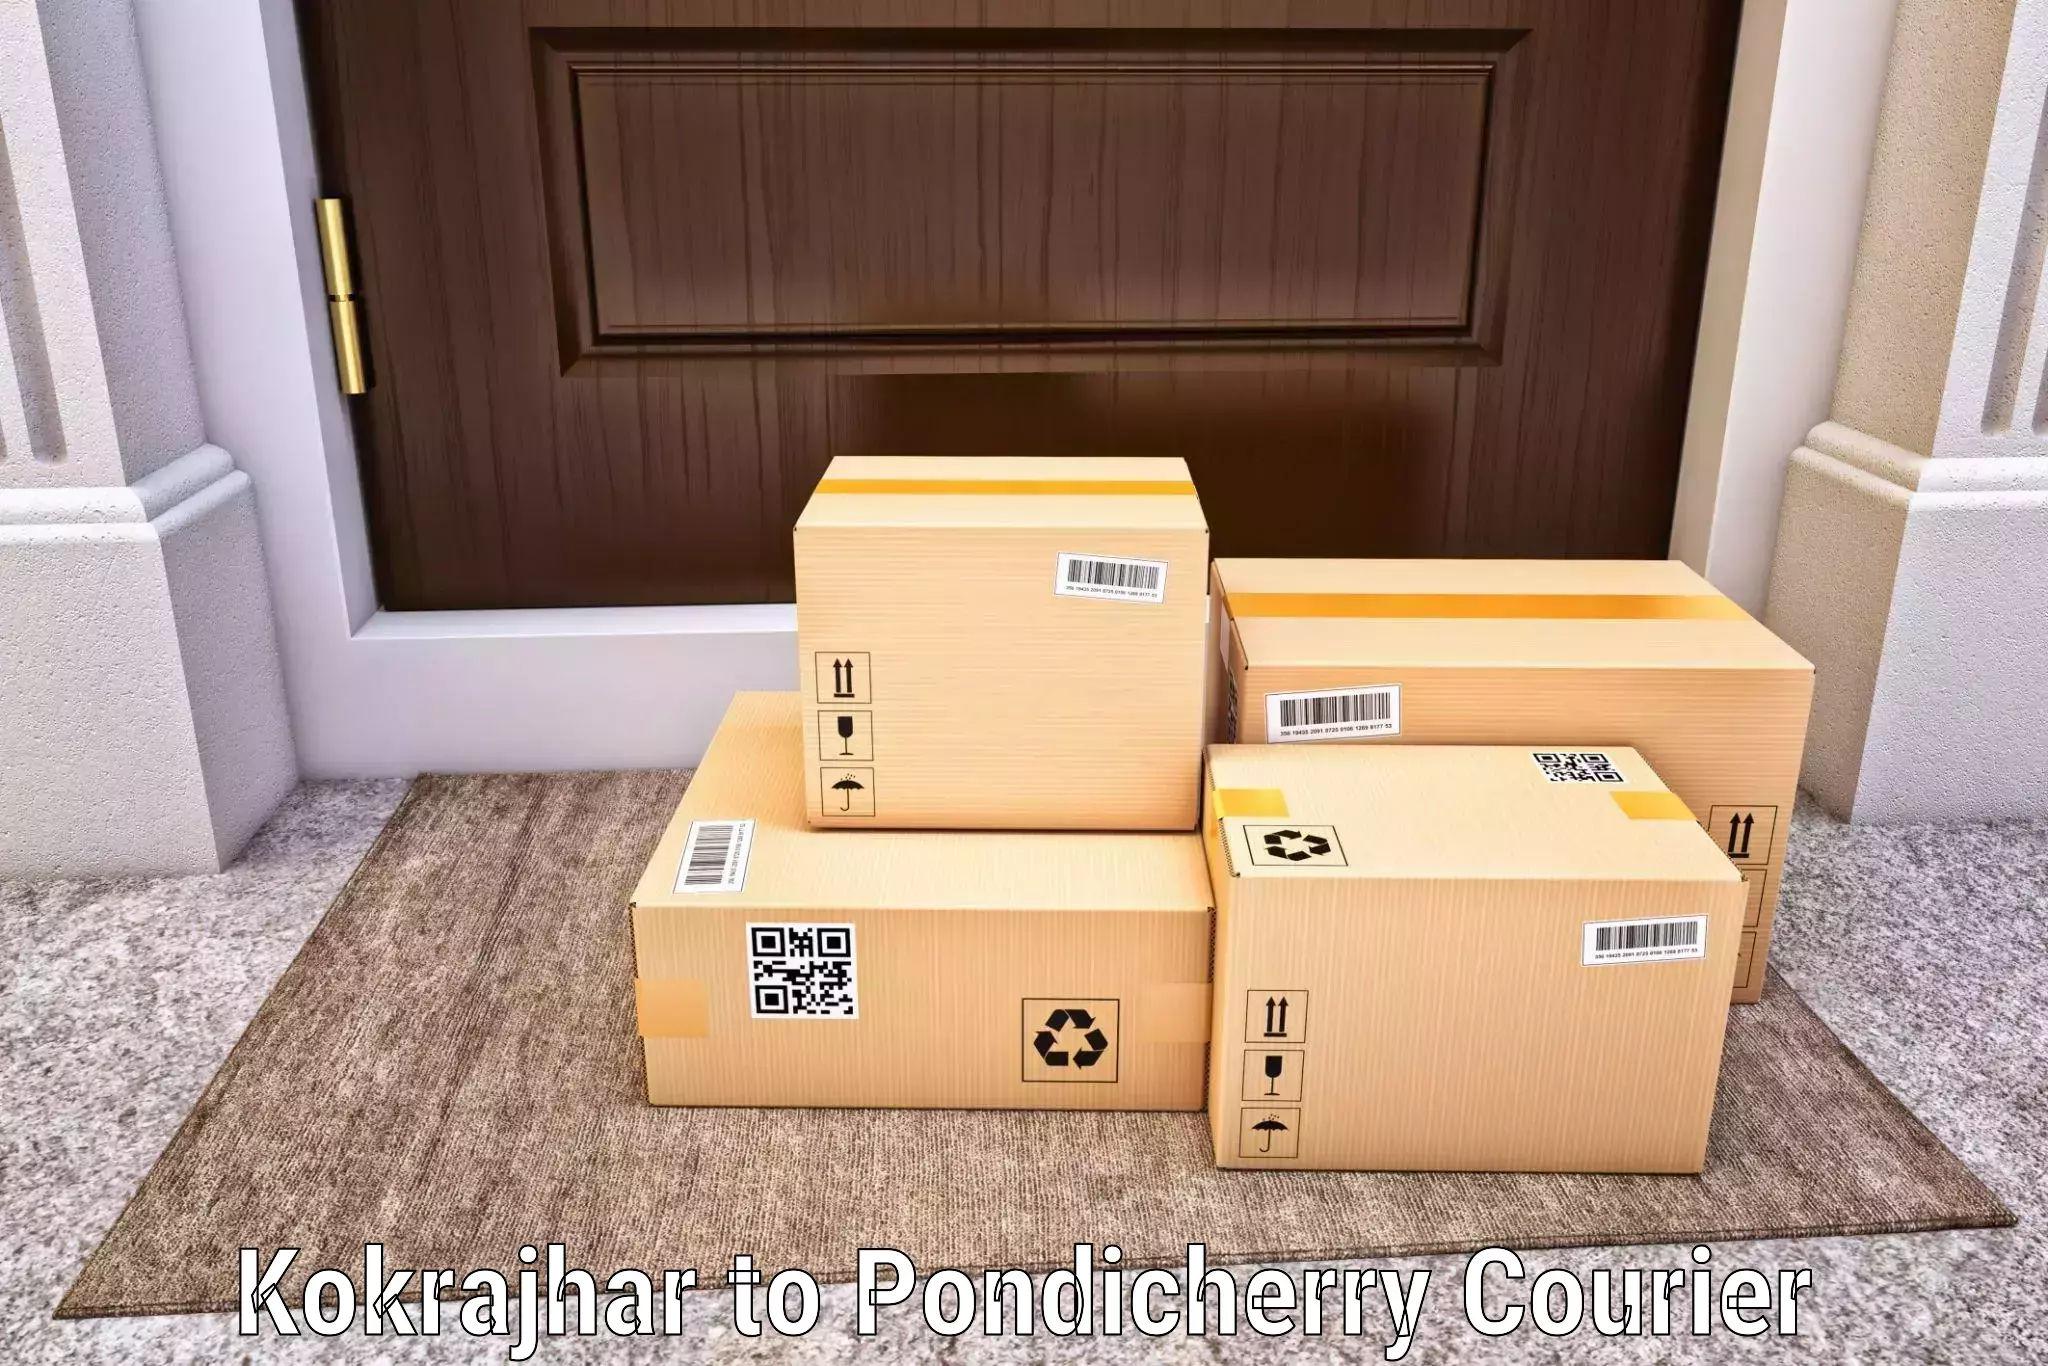 On-demand delivery in Kokrajhar to Pondicherry